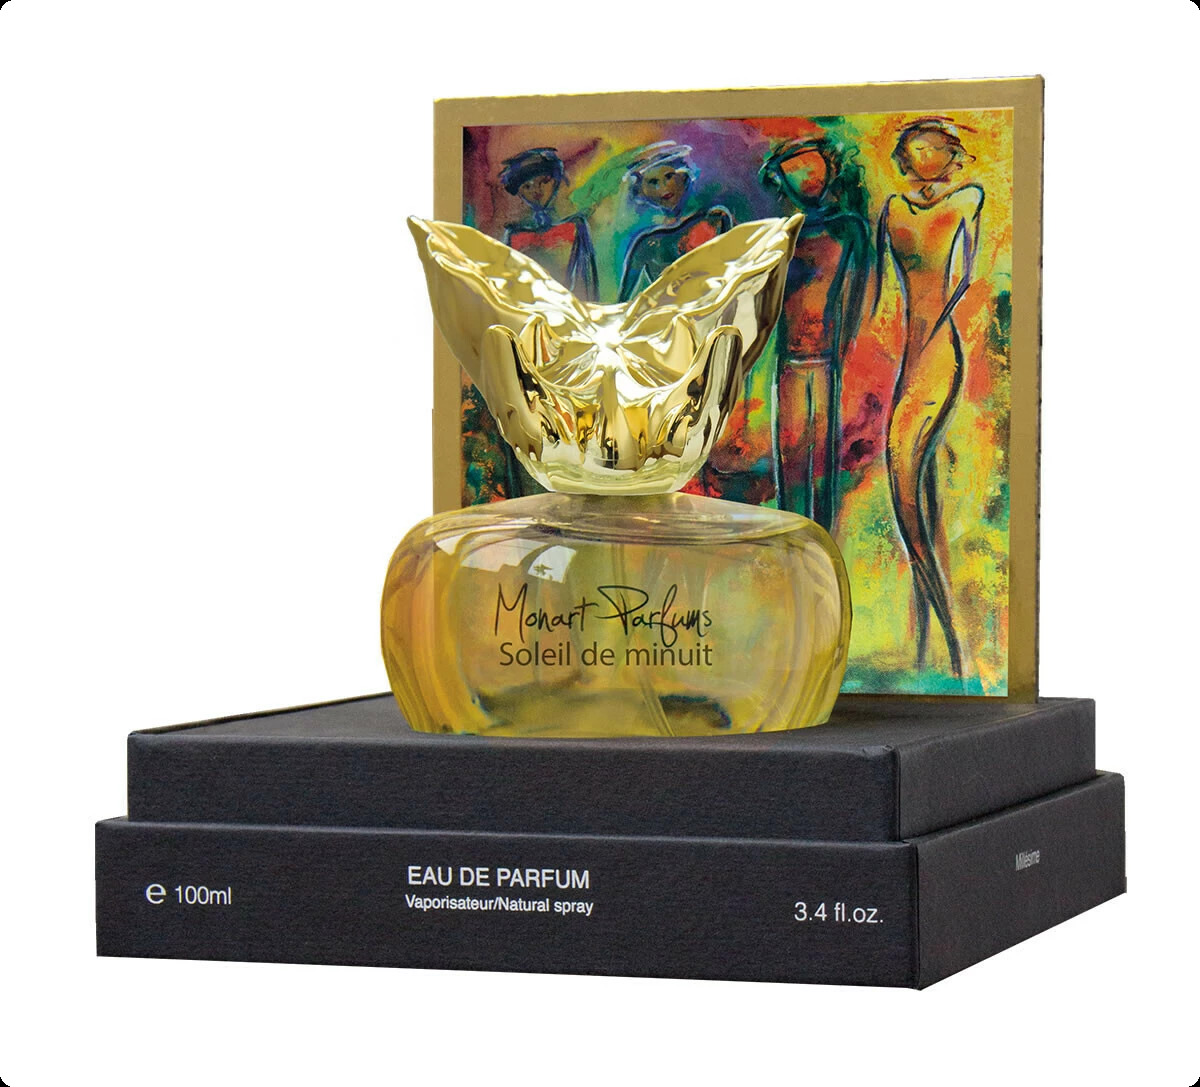 Монарт парфюм Солеил де минуит для женщин и мужчин